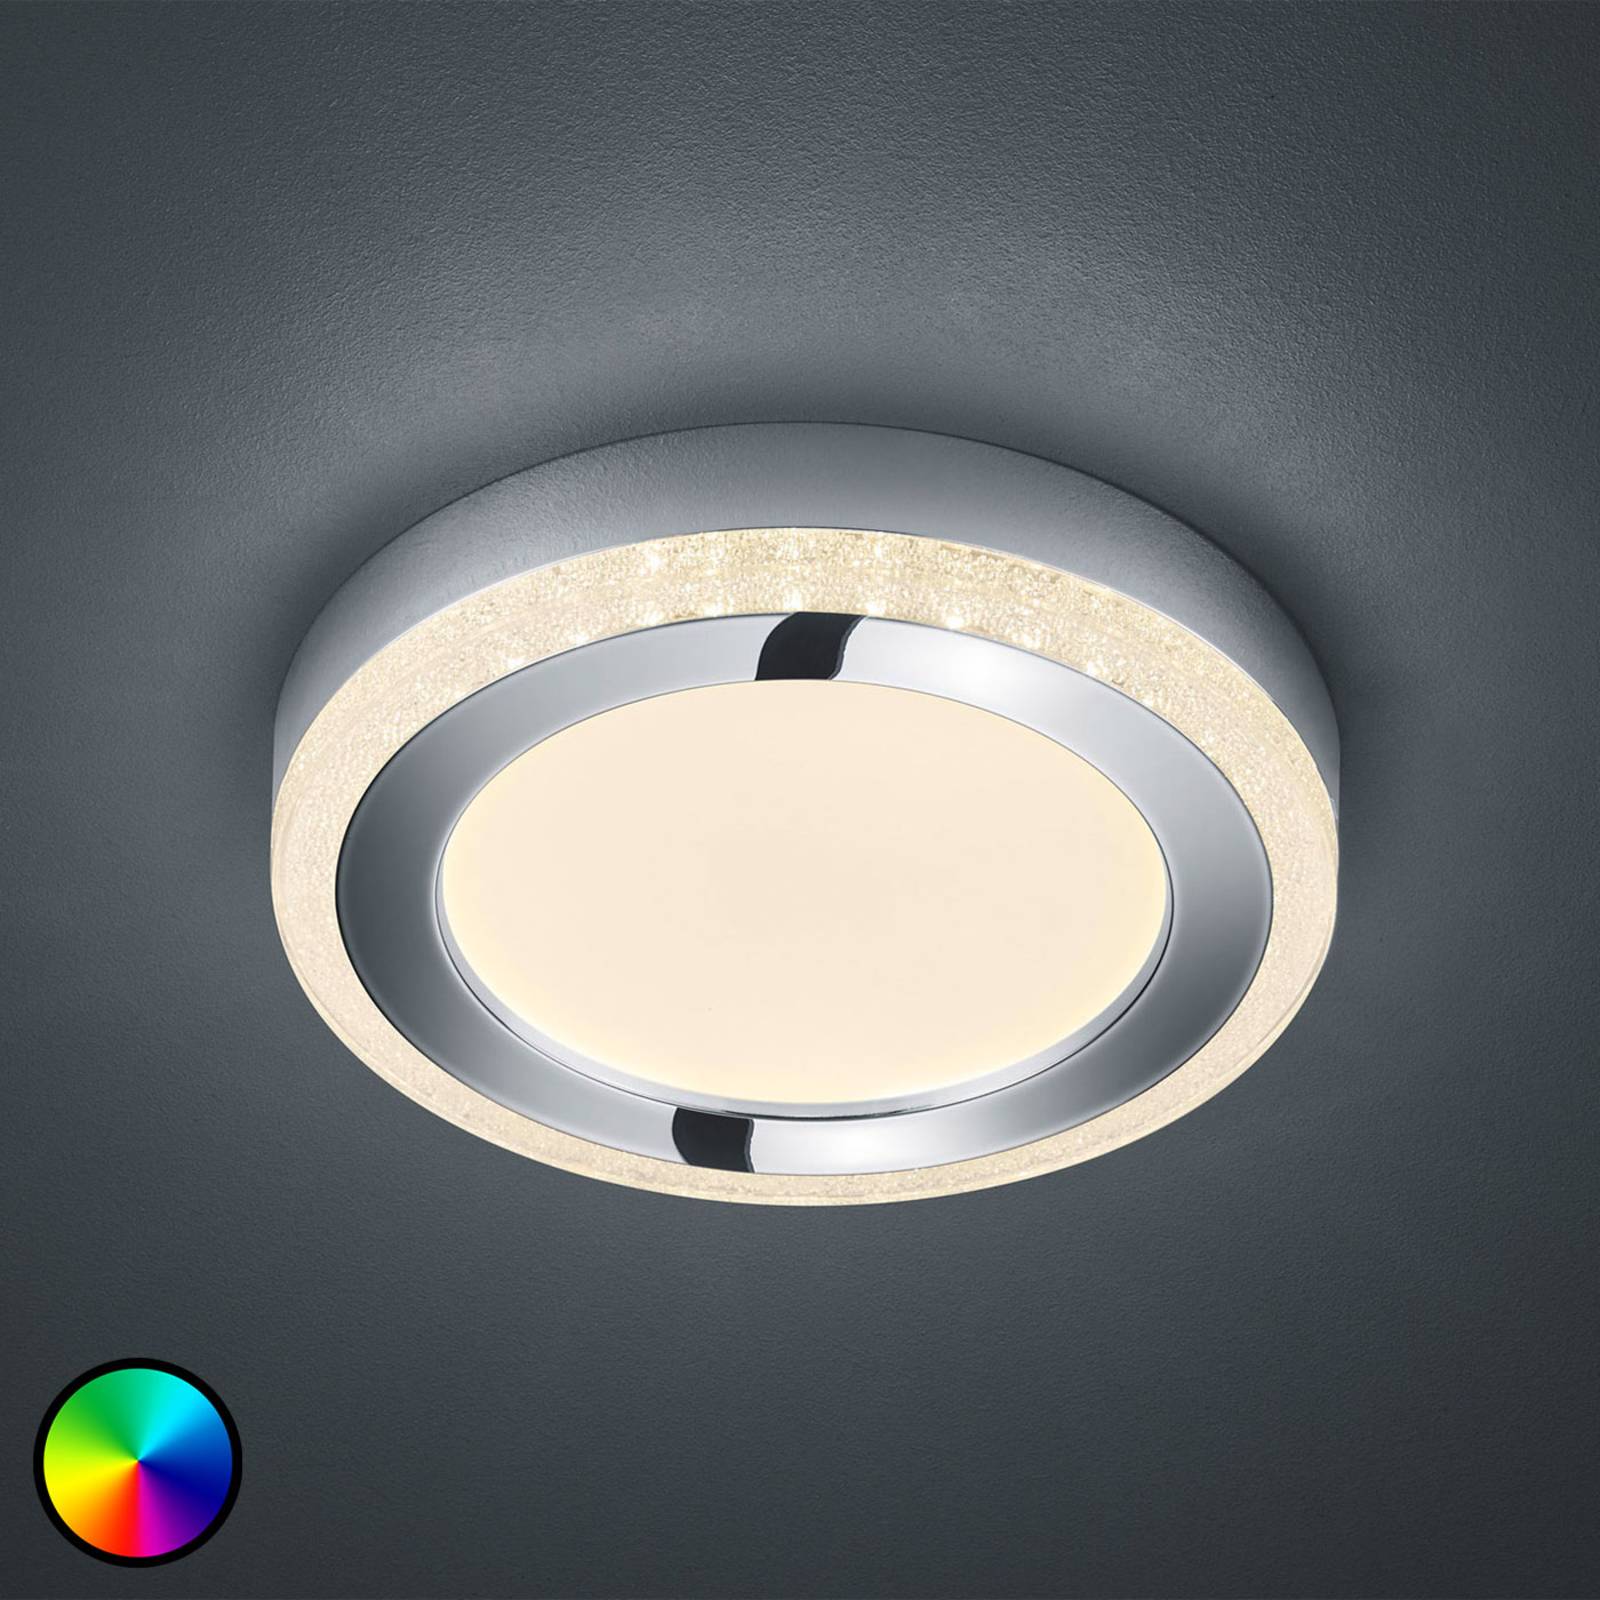 LED plafondlamp Slide, wit, rond, Ø 25 cm